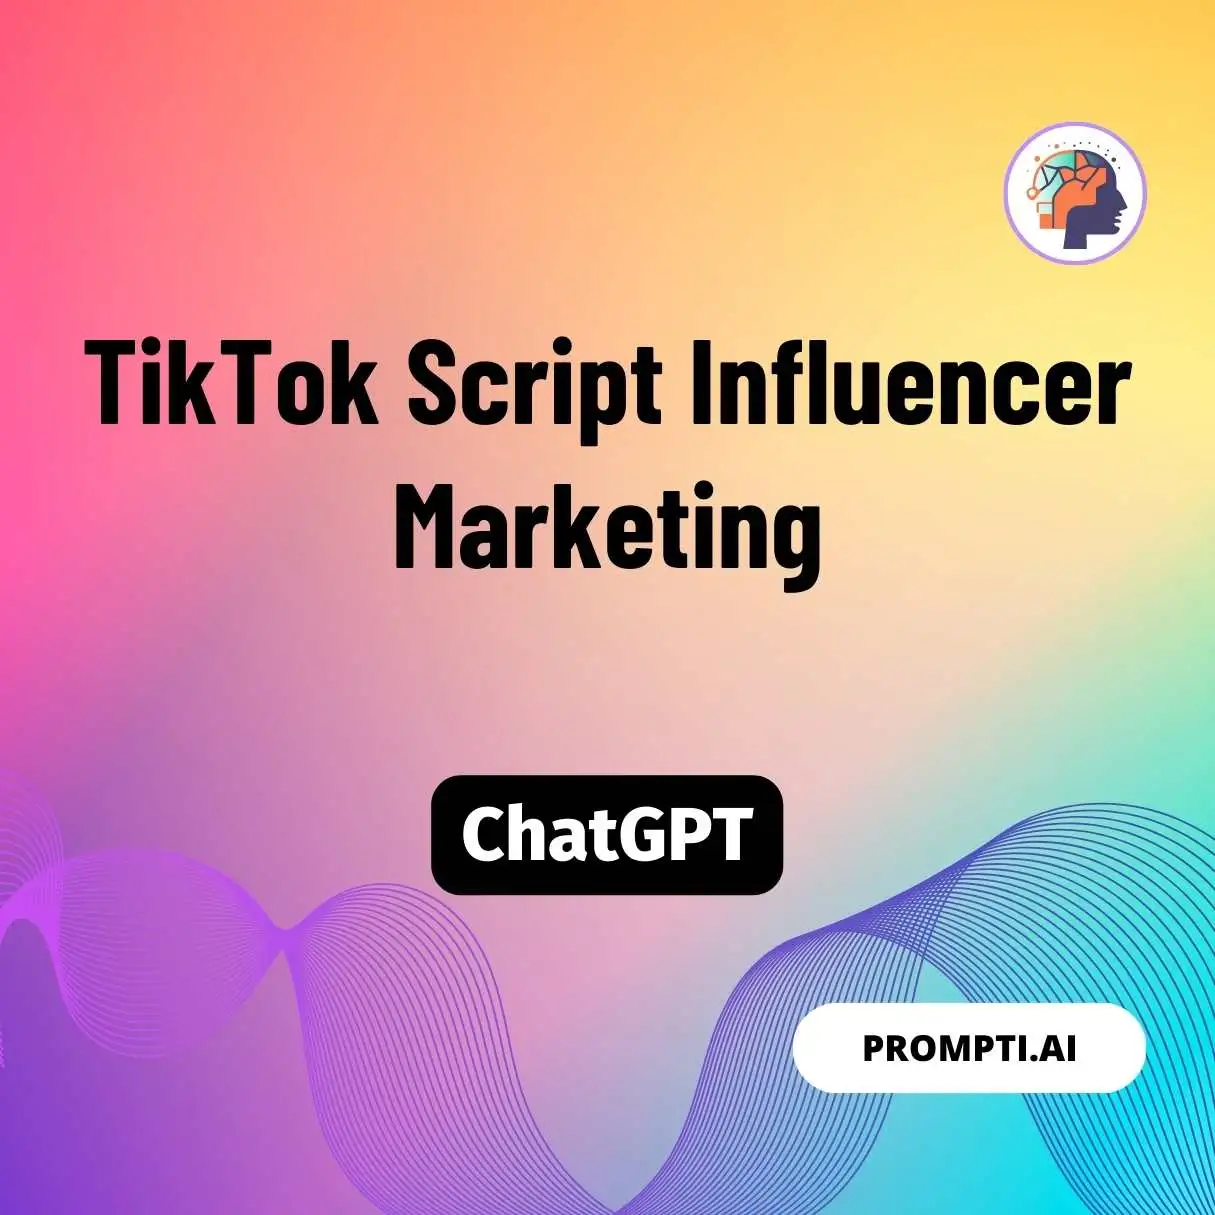 TikTok Script Influencer Marketing